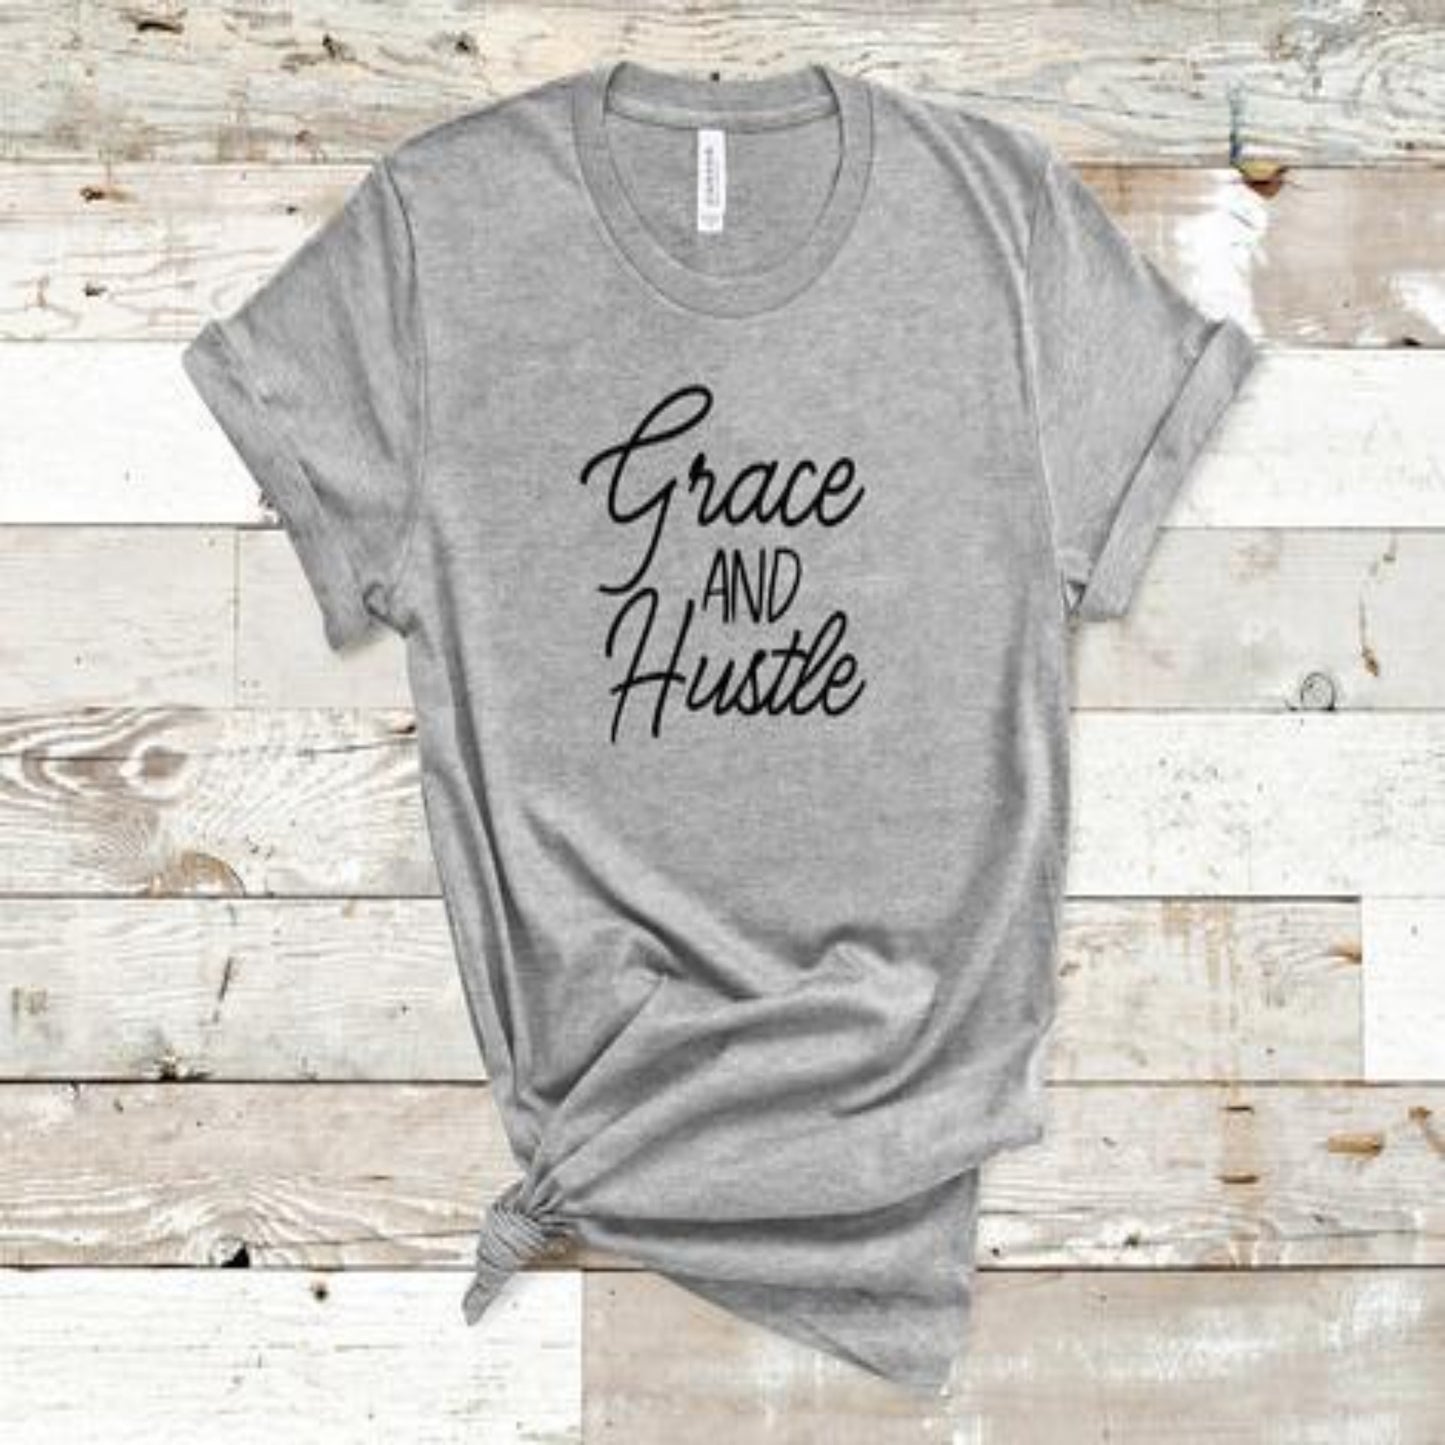 grace_hustle specialty tee everyday tshirt casual wear comfortable tshirt